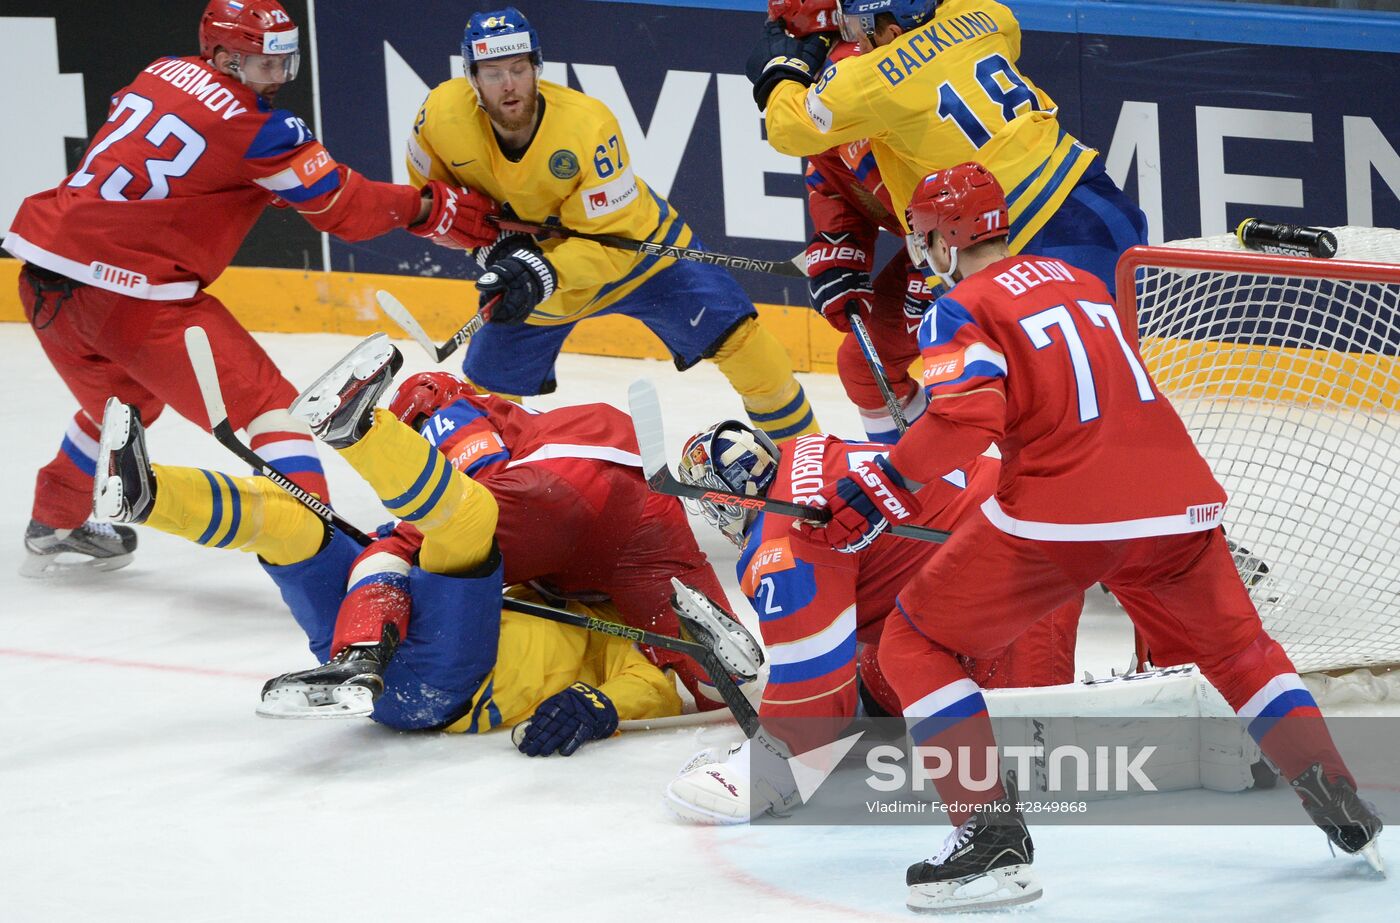 2016 IIHF World Championship. Russia vs. Sweden